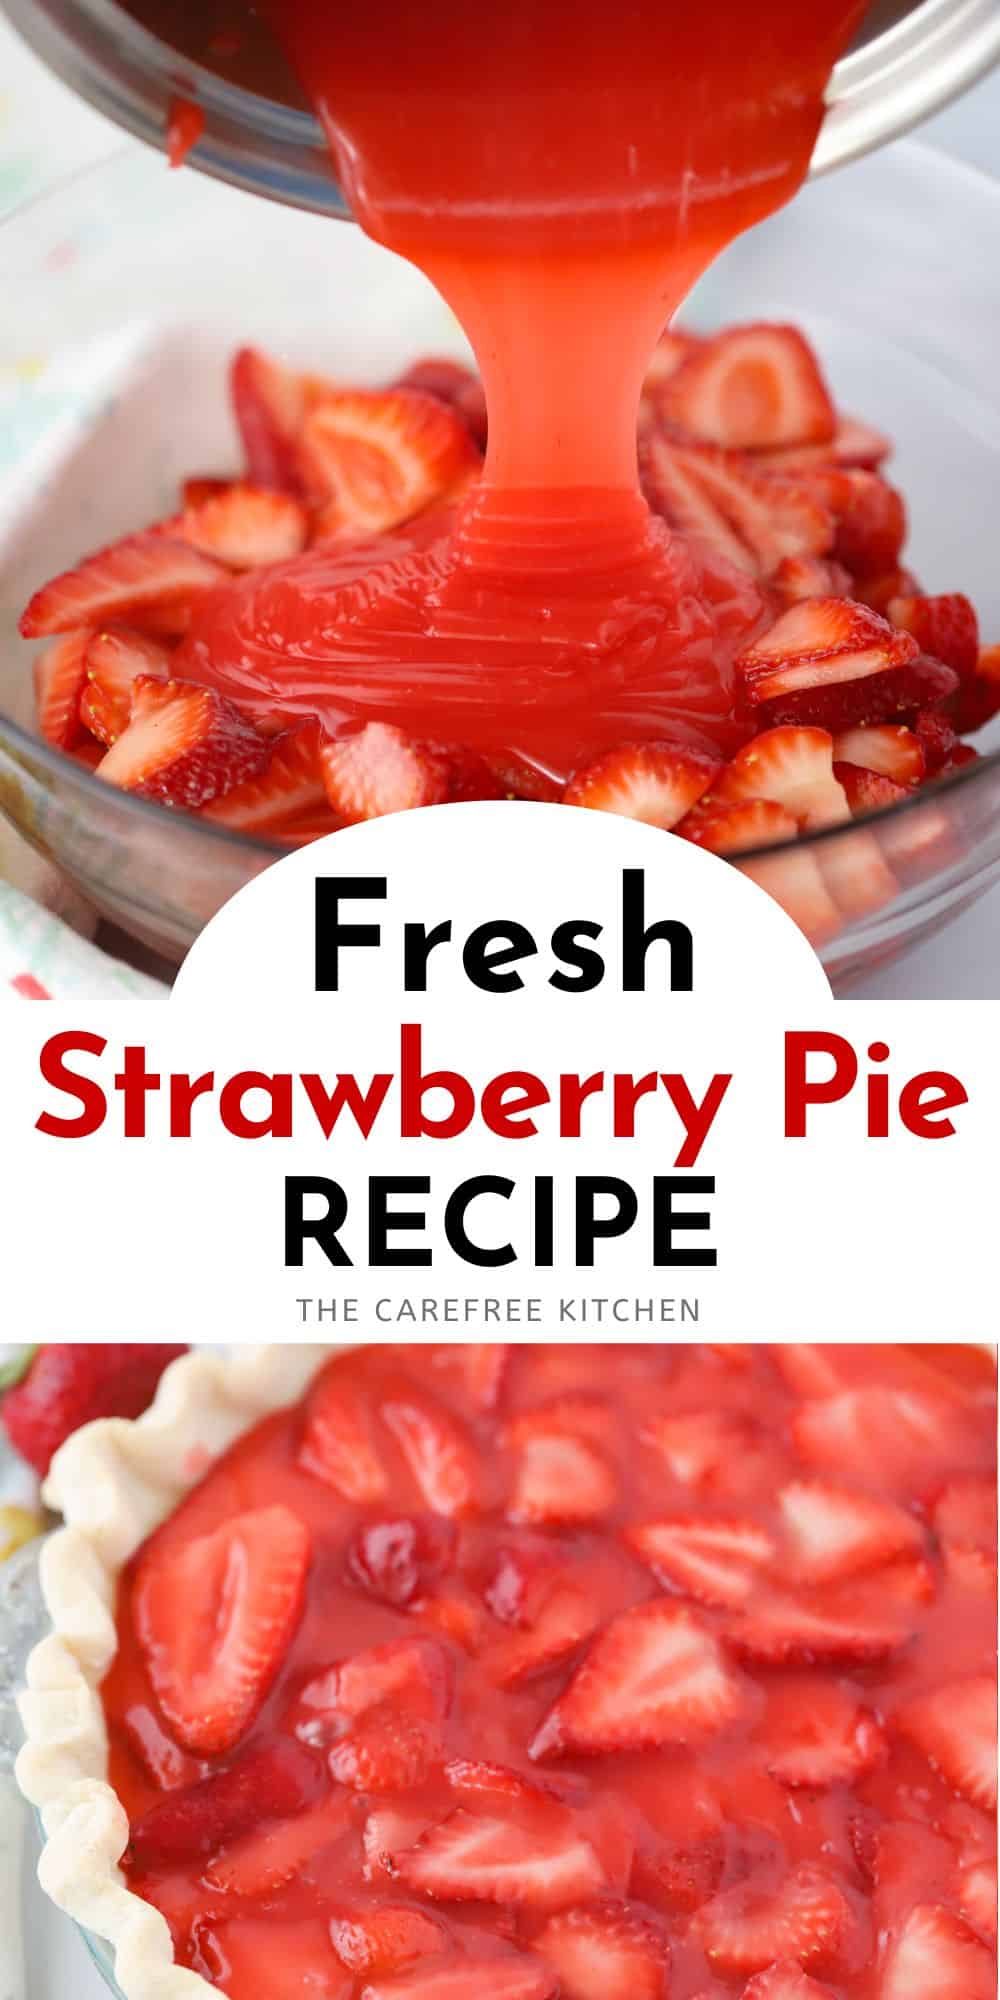 Fresh Strawberry Pie Recipe - The Carefree Kitchen